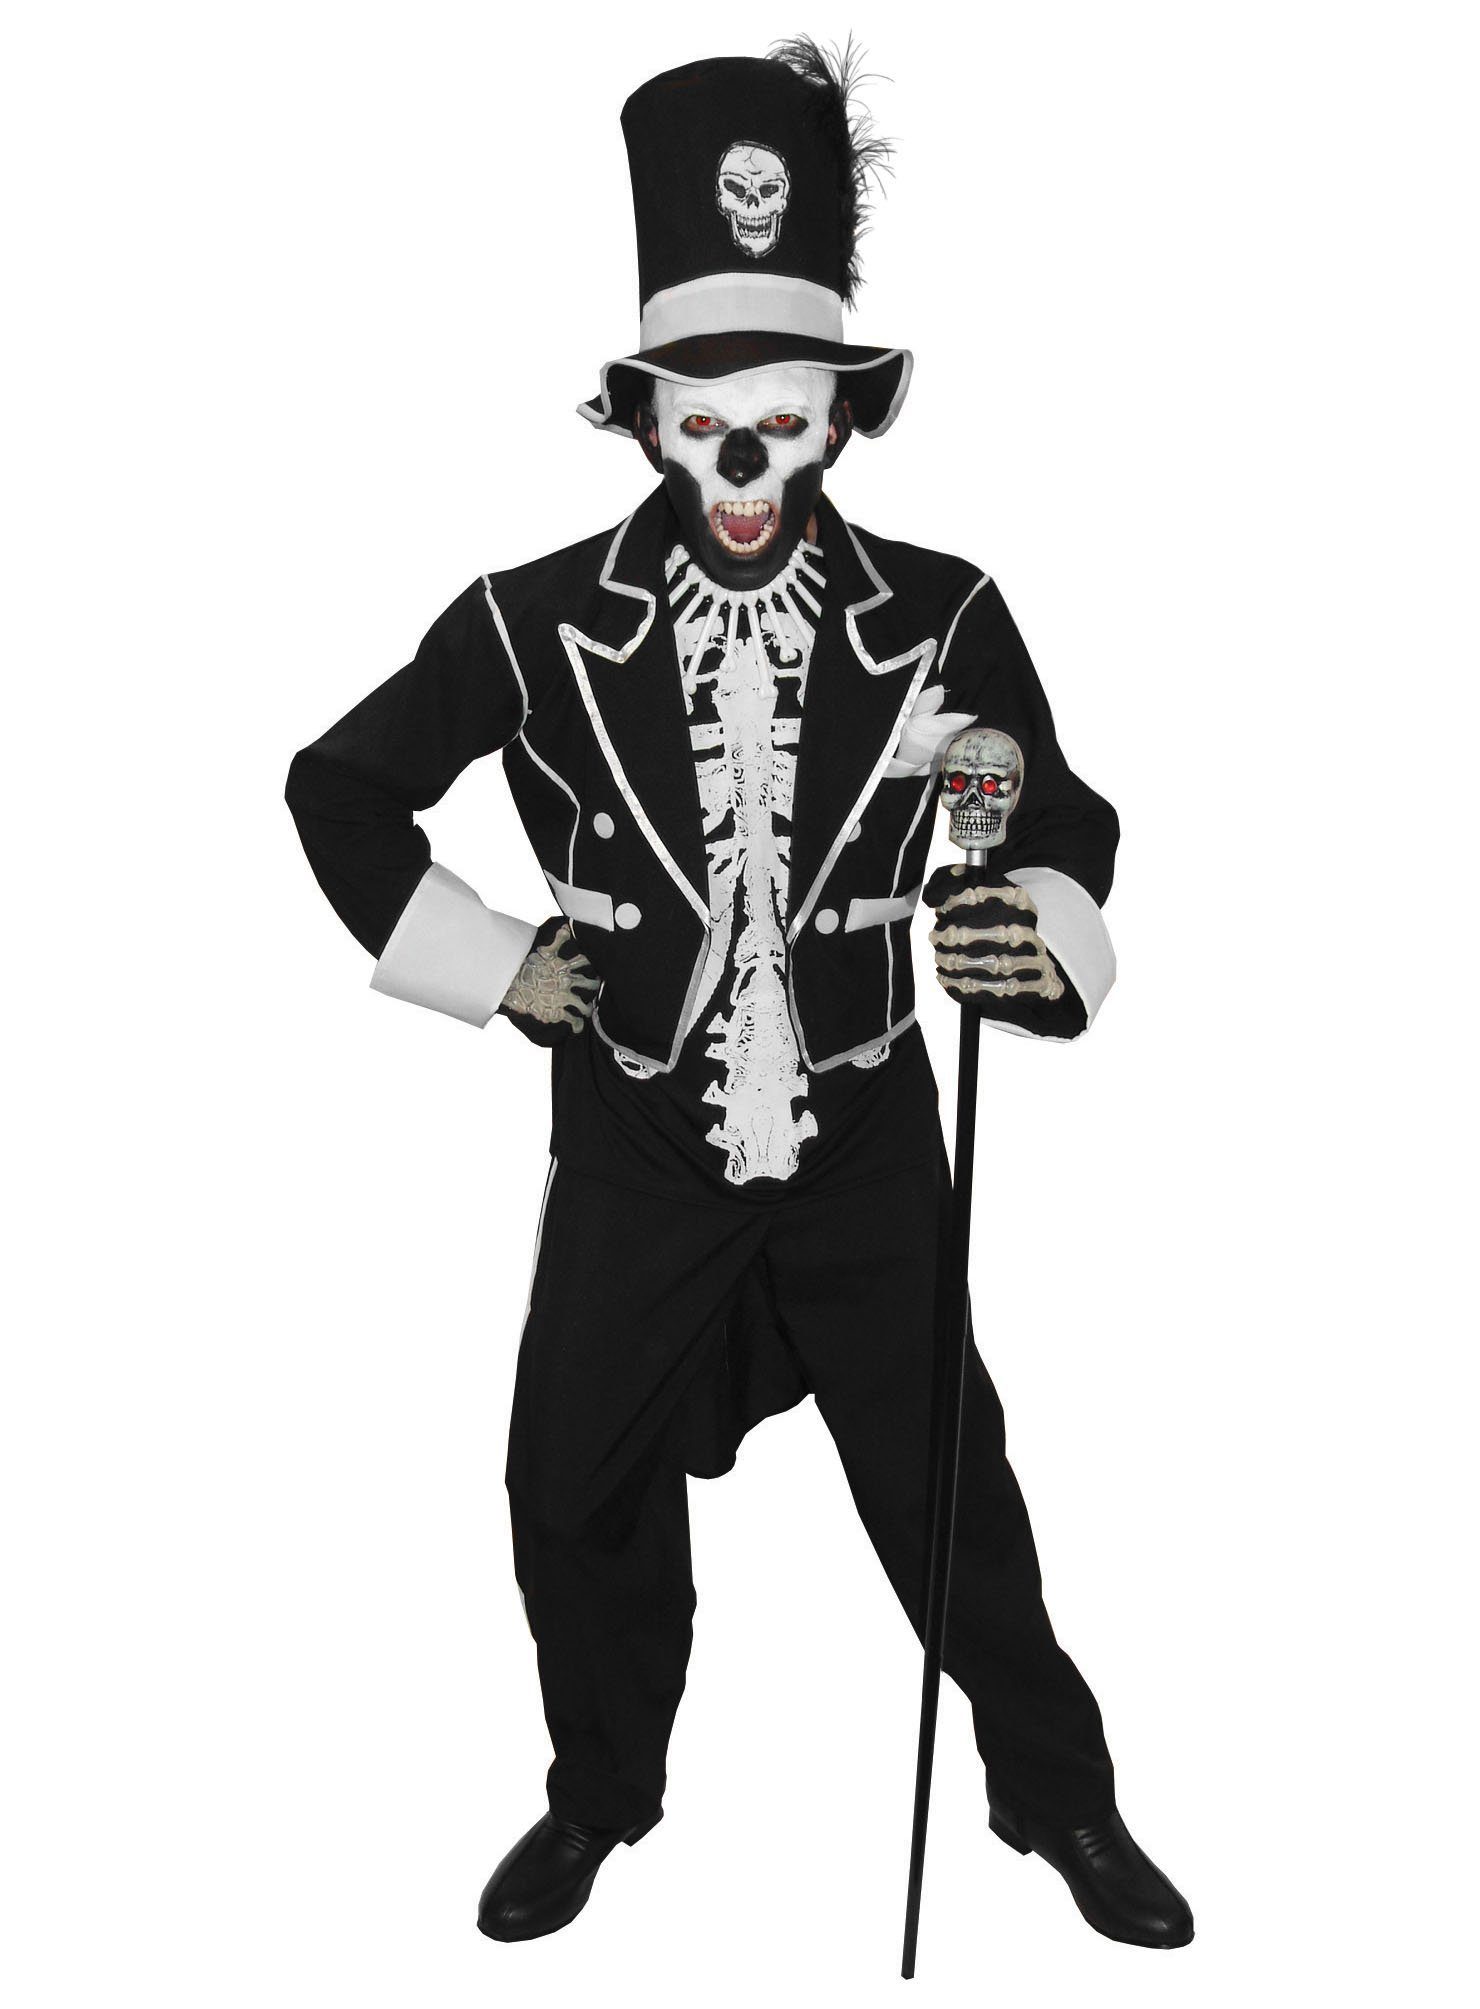 Metamorph Kostüm Baron Samedi, Kultiges Baron Samedi Kostüm für Halloween und Karneval